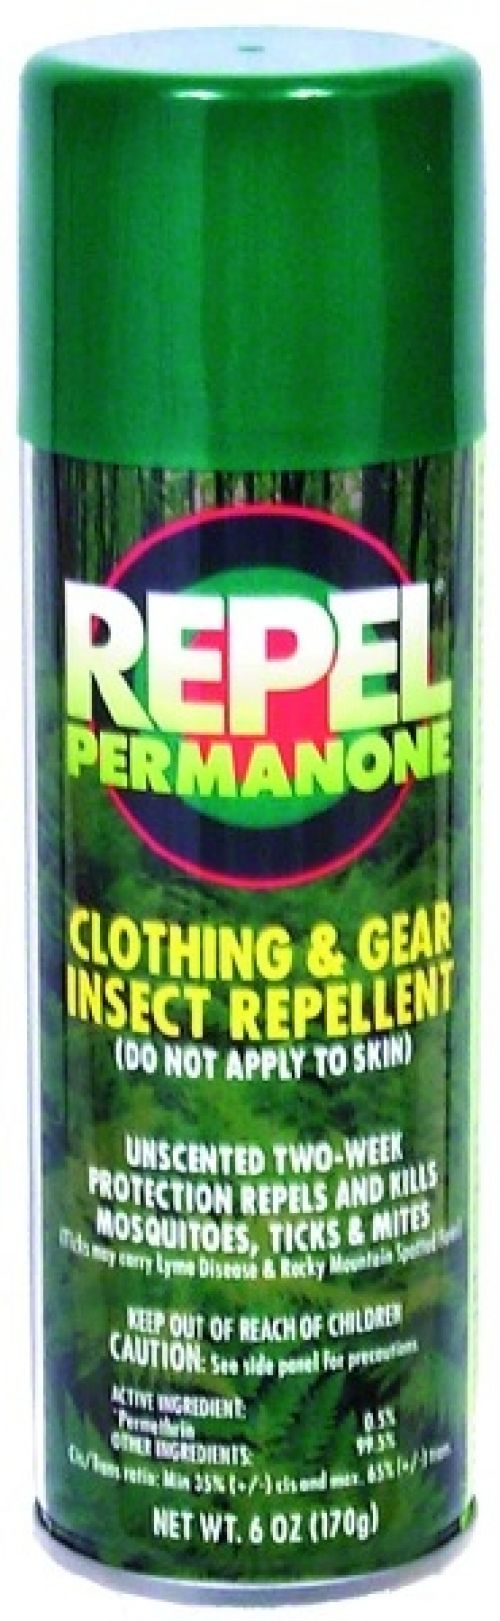 Repel Permanonerepellent For Clothing